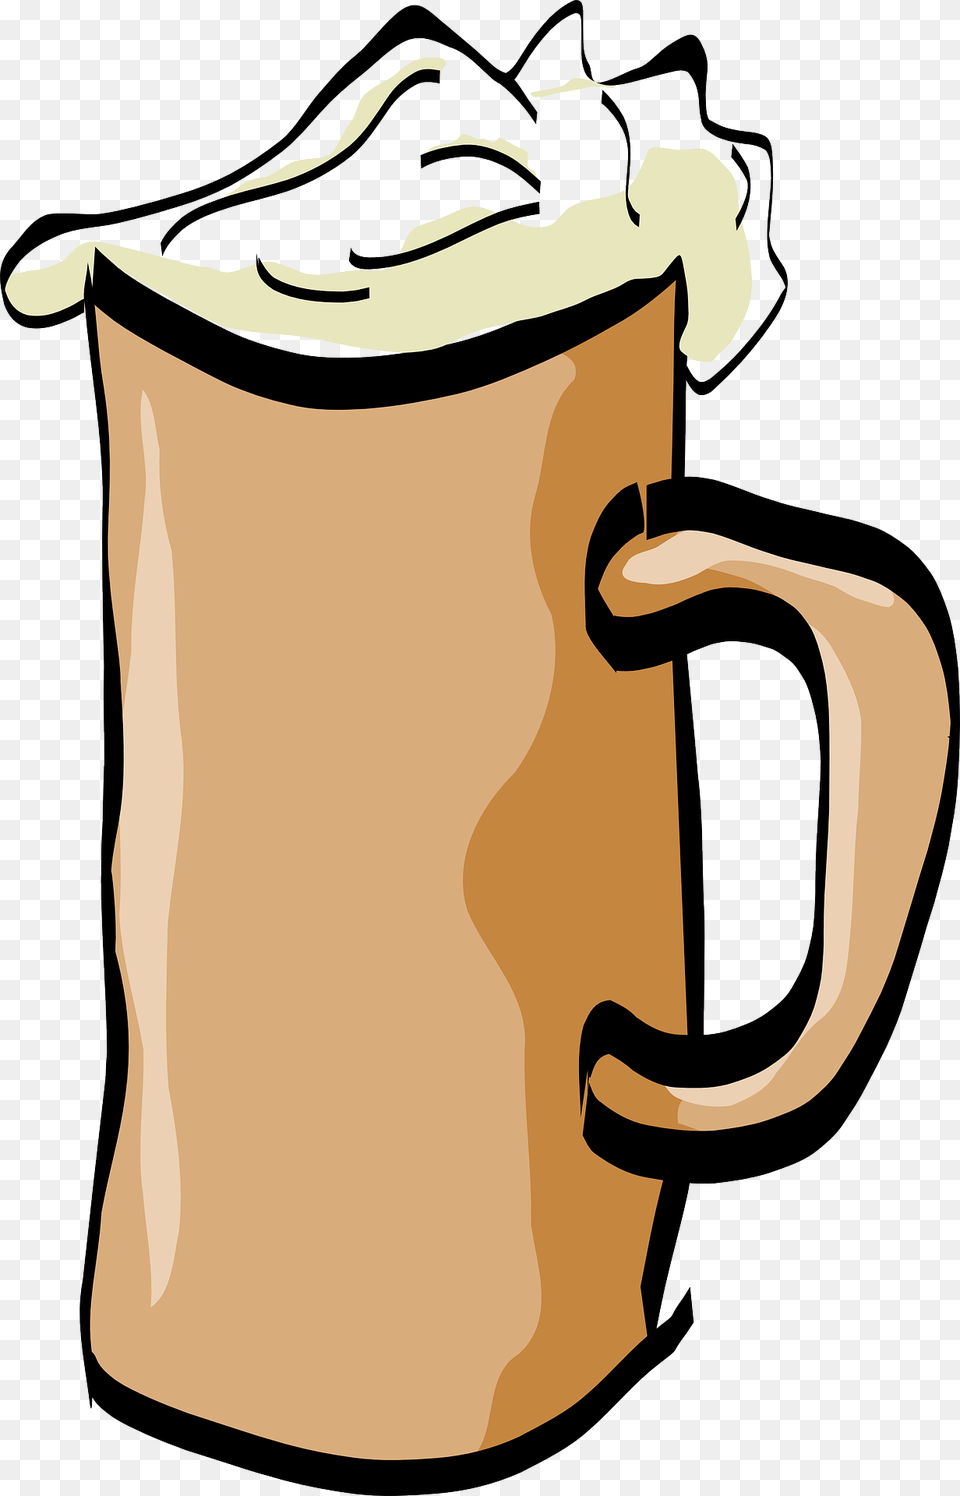 Cupchocolate Milkdrink Beer, Cup, Smoke Pipe, Beverage, Dessert Png Image